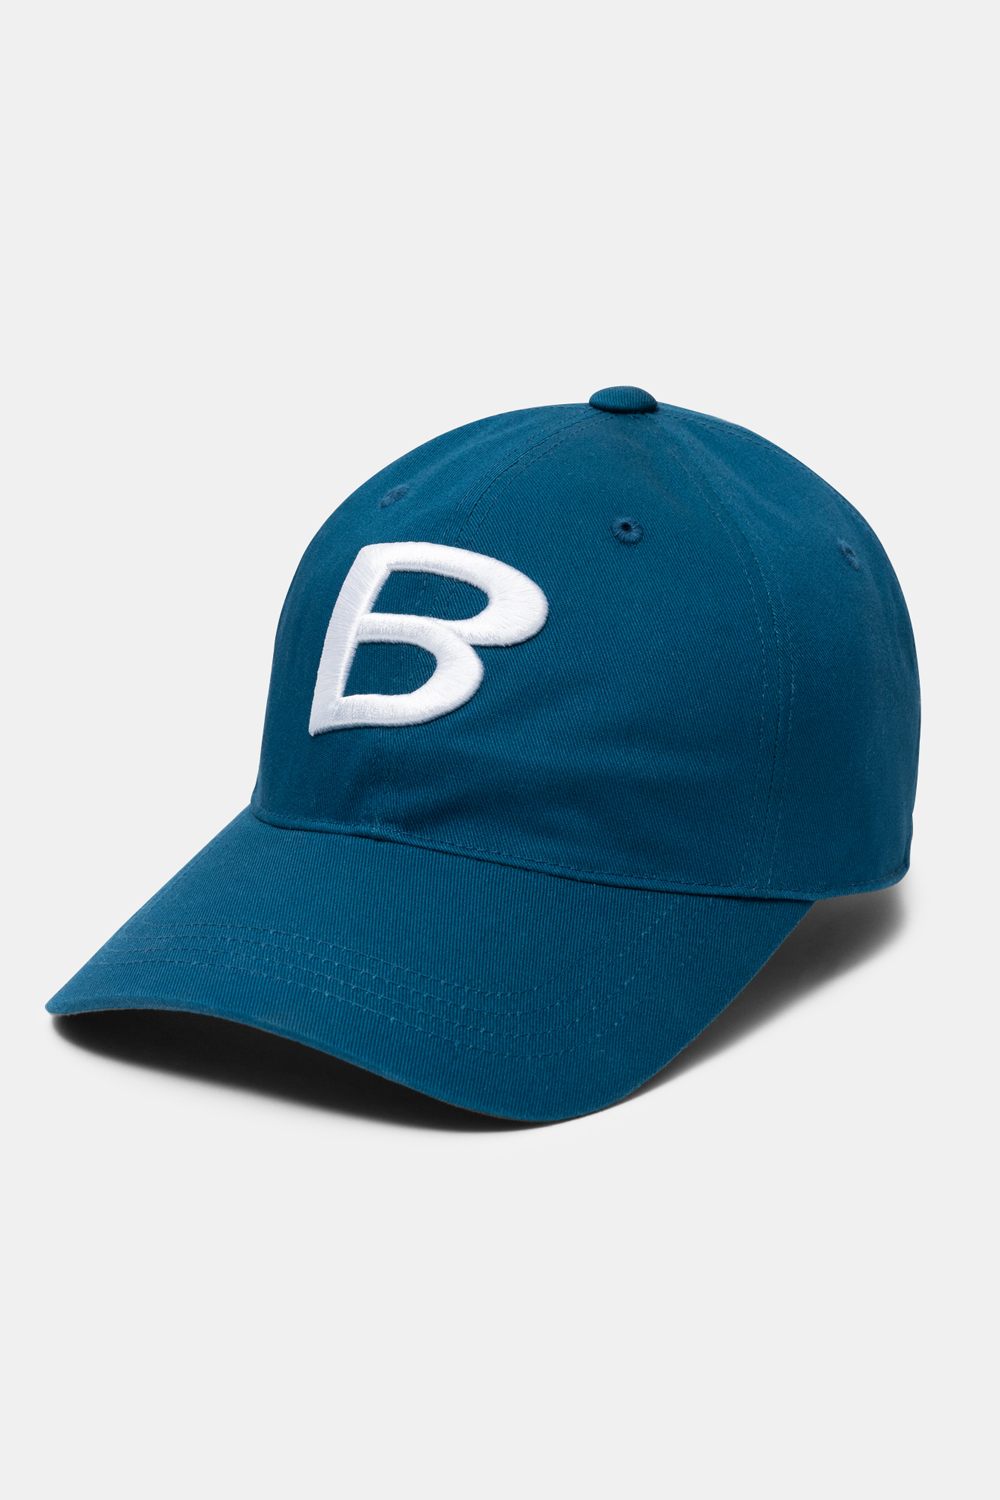 B LOGO BALL CAP - DARK BLUE